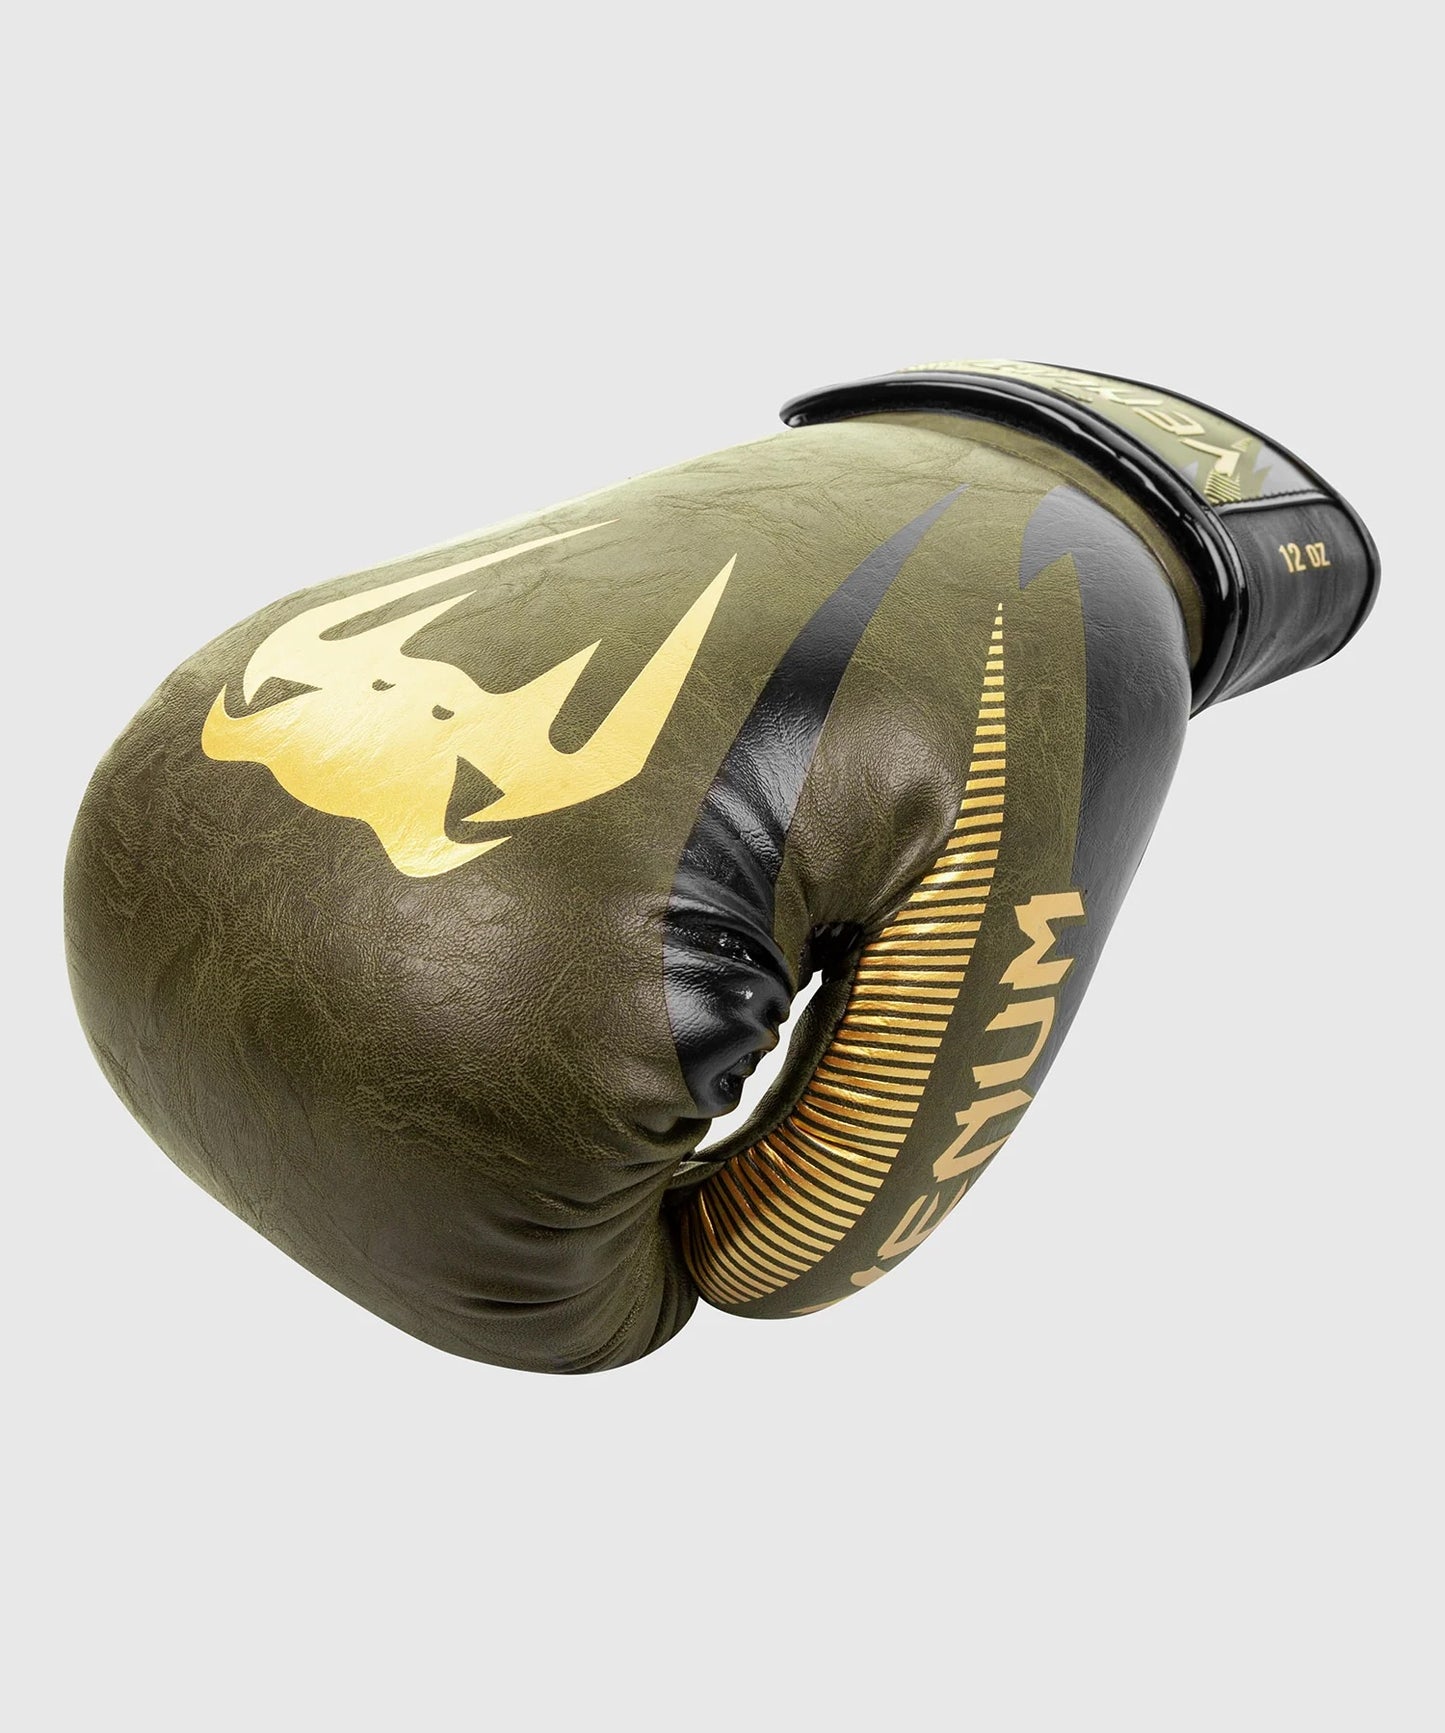 Impact Boxing Gloves - Khaki/Gold